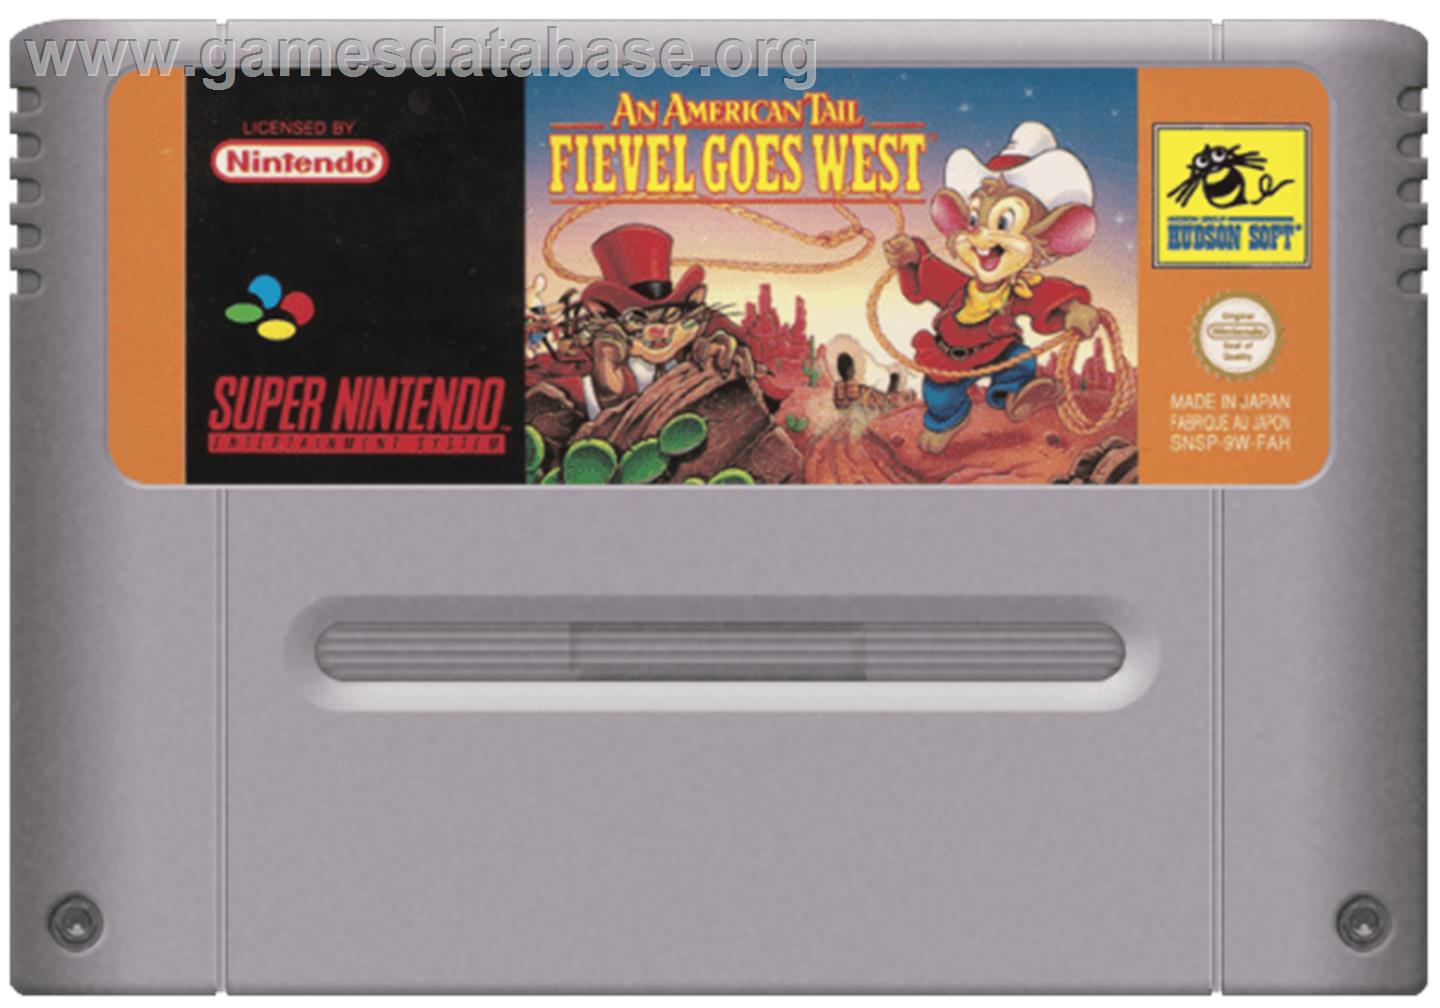 An American Tail: Fievel Goes West - Nintendo SNES - Artwork - Cartridge